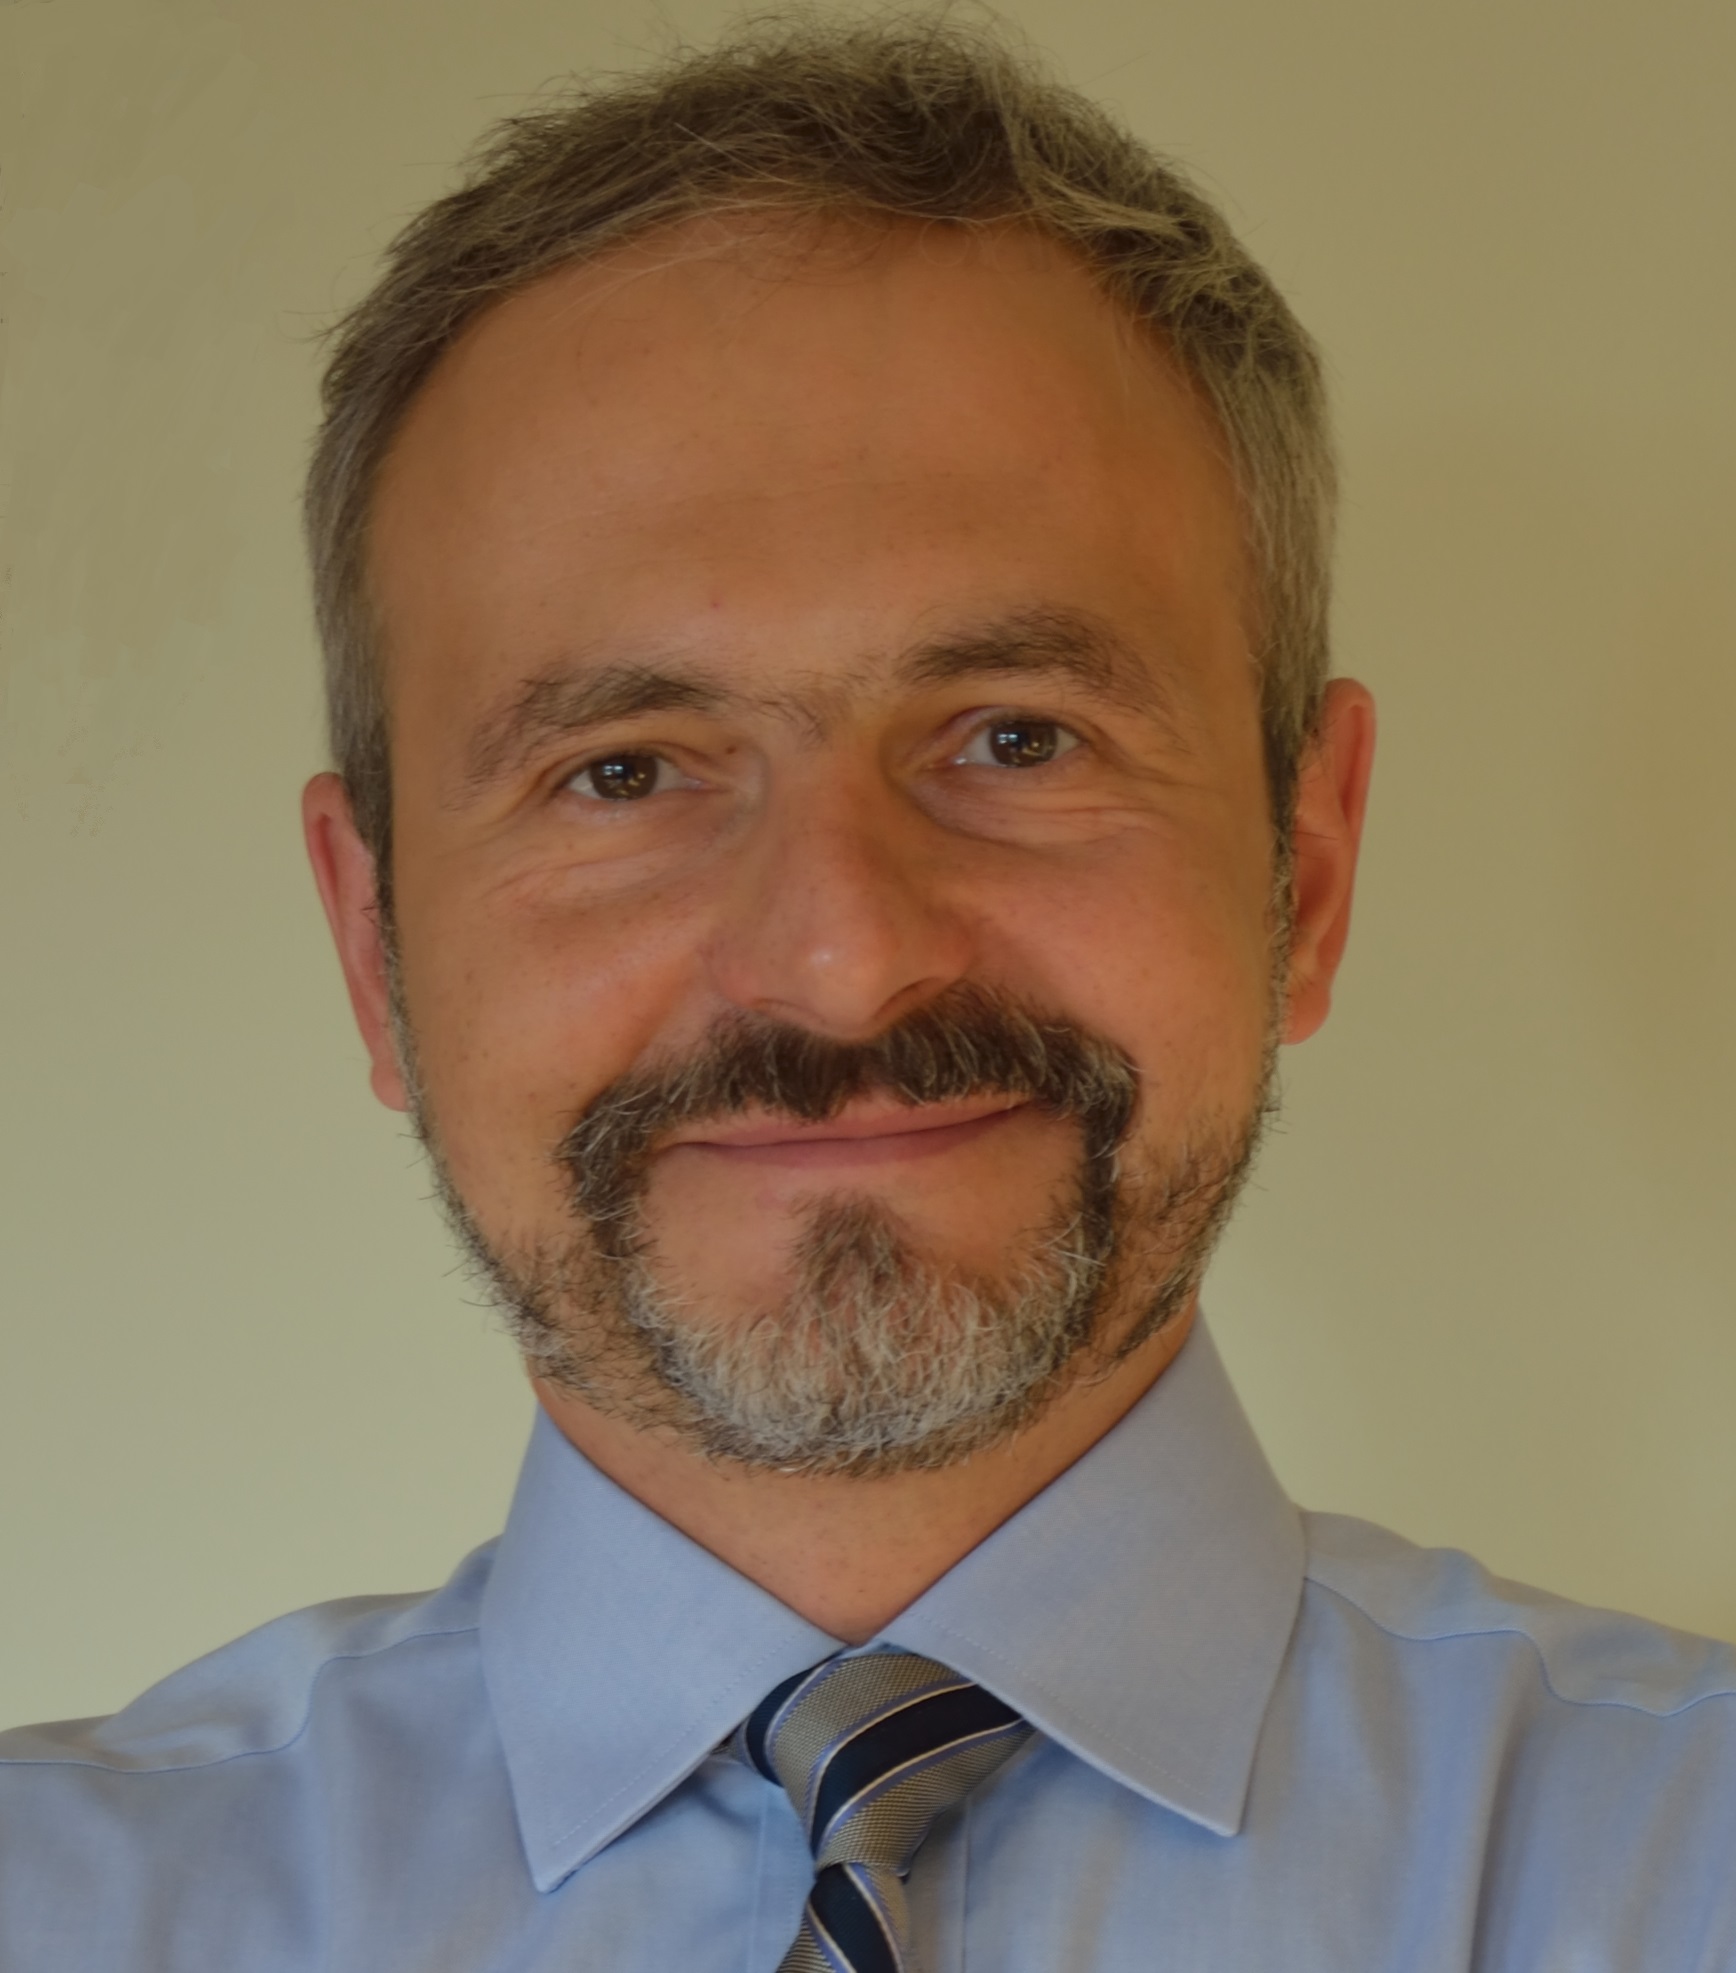 Profile image of Prof. Viacheslav Morozov